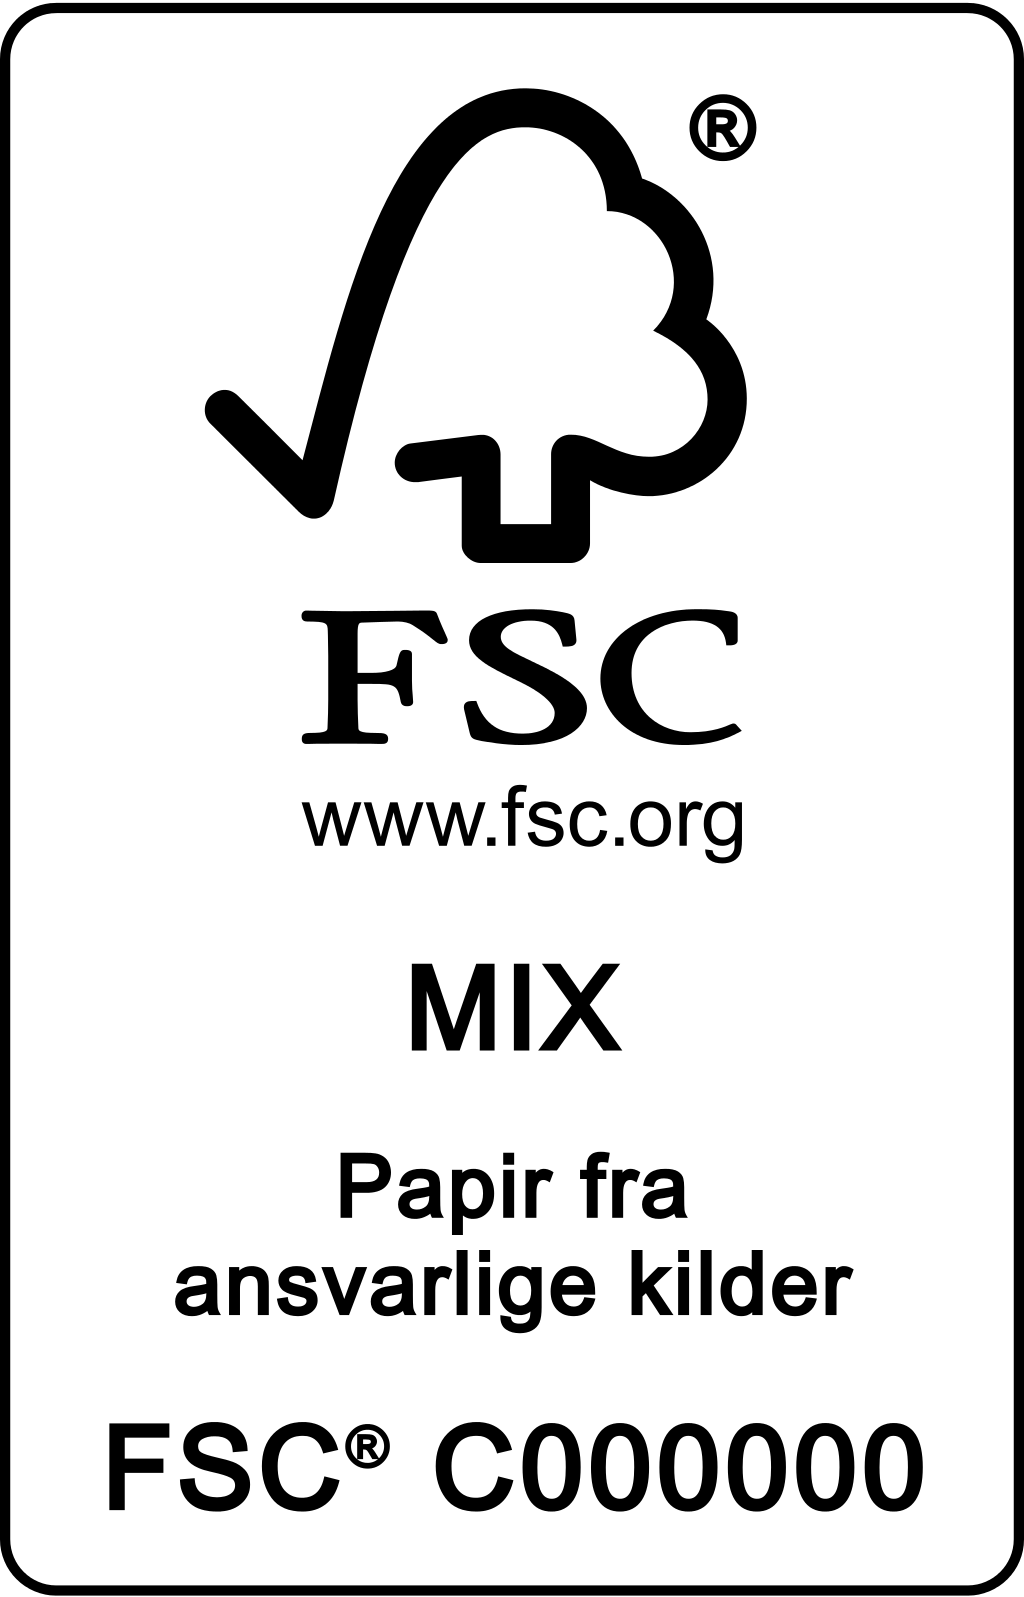 FSC MIX-mærket